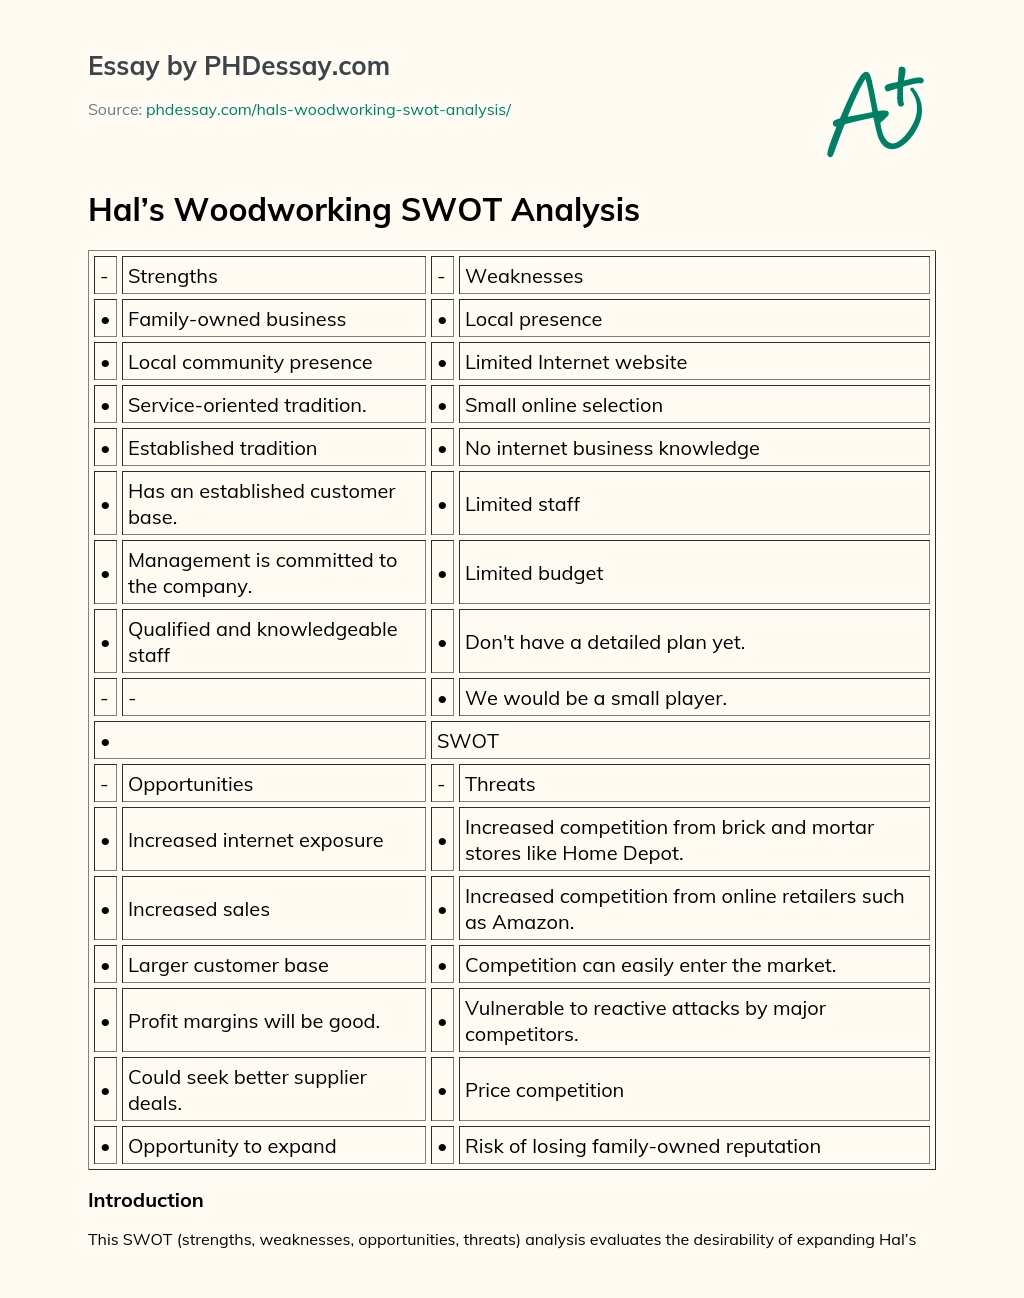 Hal’s Woodworking SWOT Analysis essay